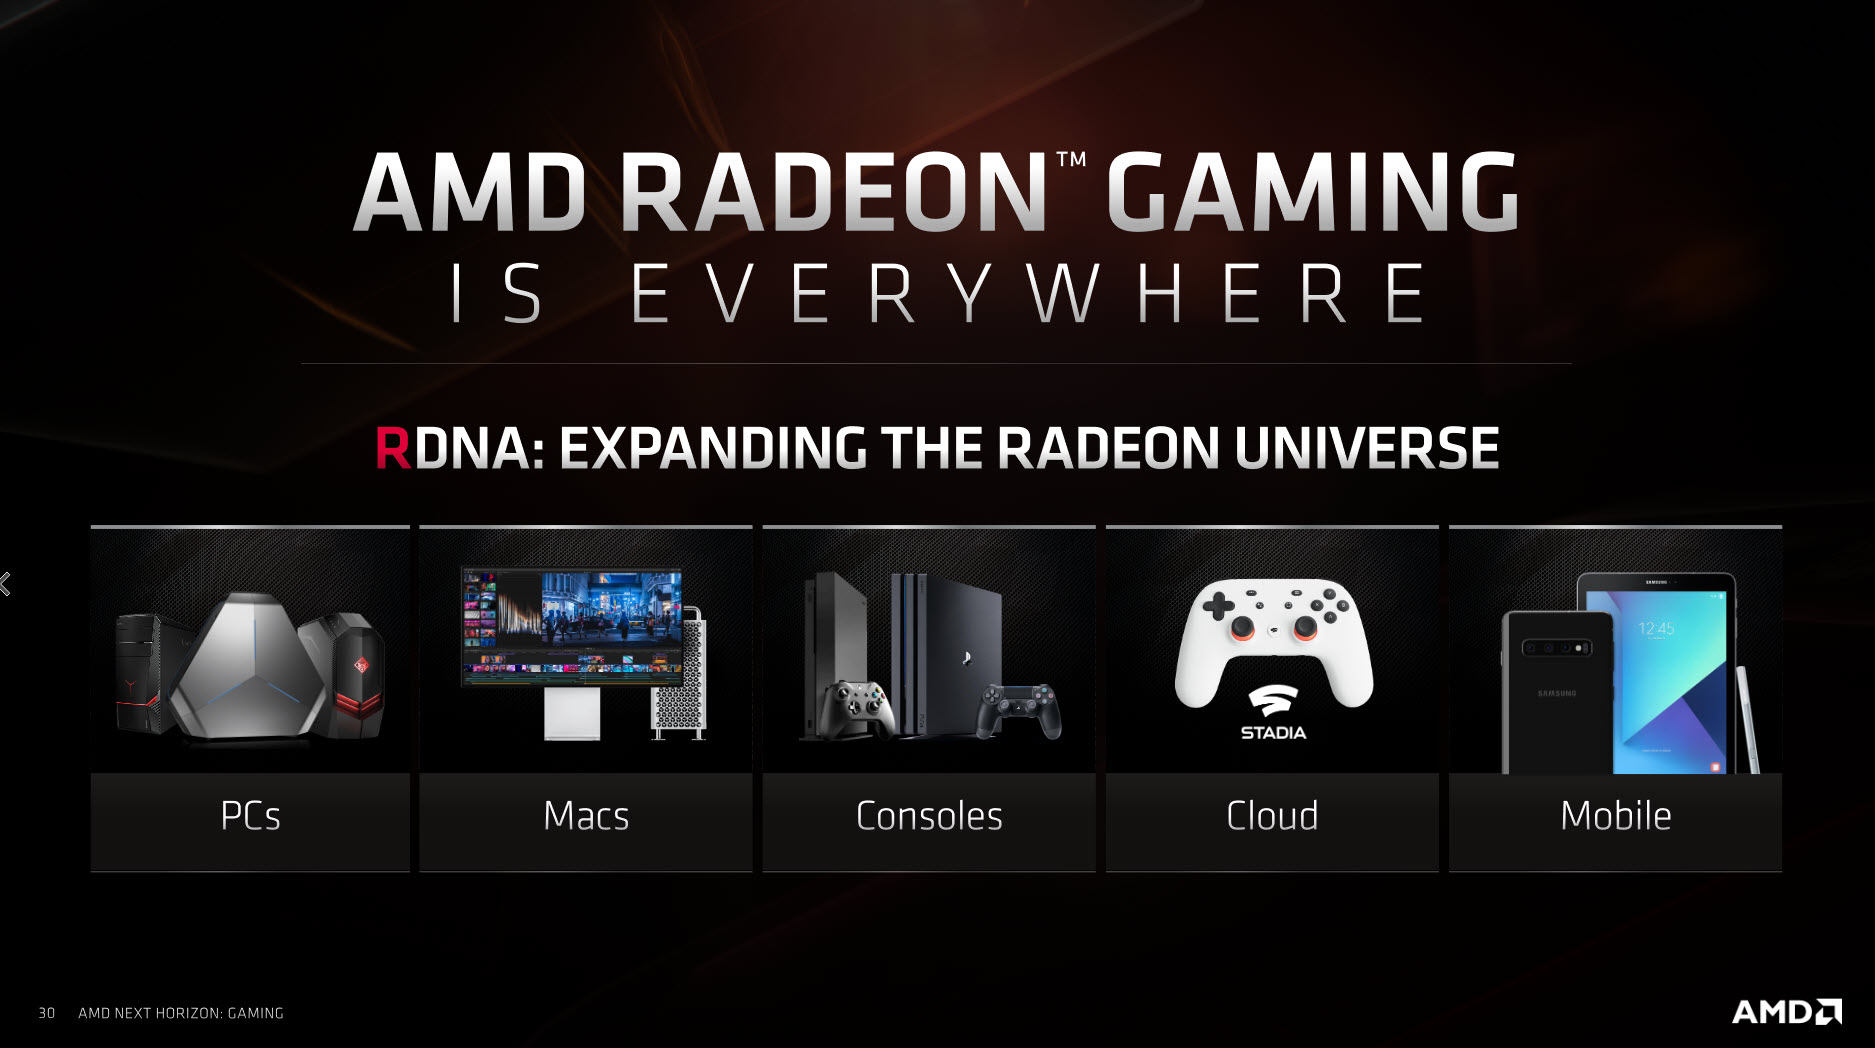 2019 07 07 10 30 52 AMD RADEON RX 5700 XT REVIEW